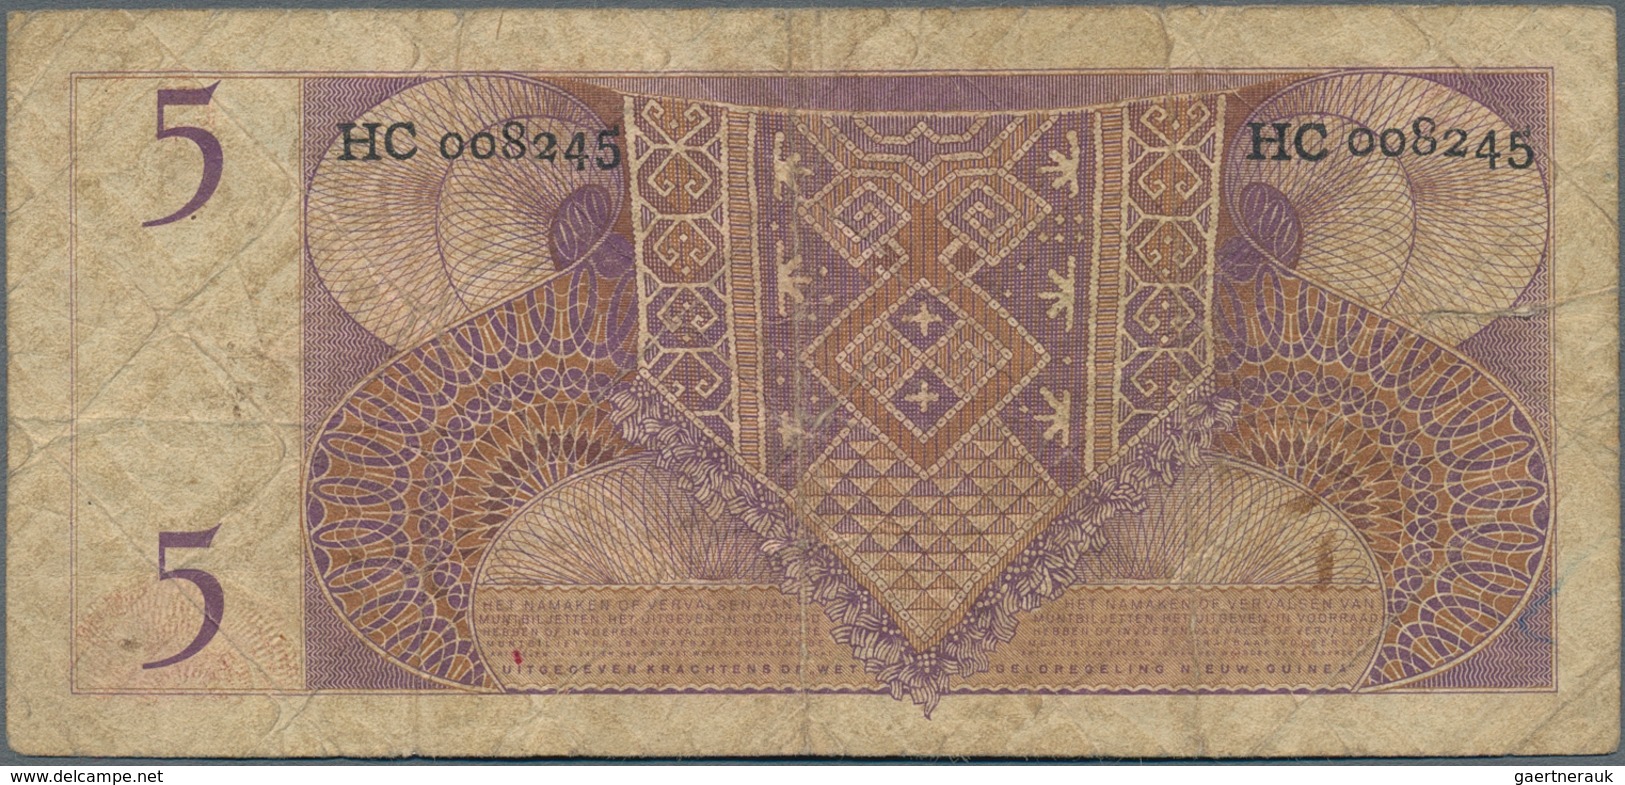 Netherlands New Guinea / Niederländisch Neu Guinea: Pair With 1 Gulden 1950 P.4 And 5 Gulden 1954 P. - Papua Nueva Guinea